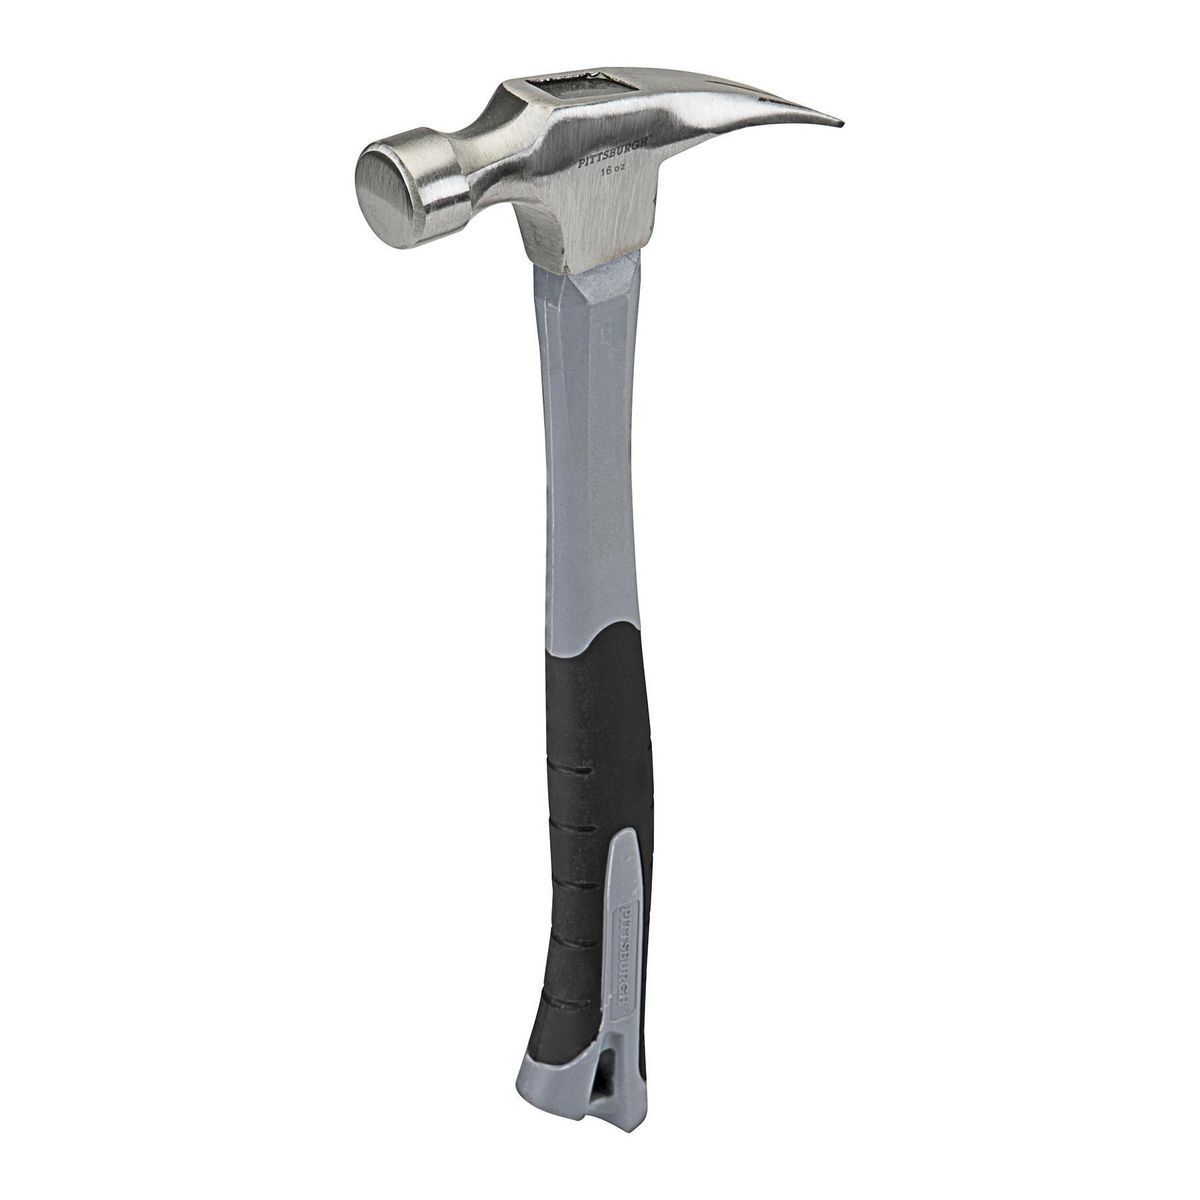 PITTSBURGH 16 Oz. Rip Hammer with Fiberglass Handle